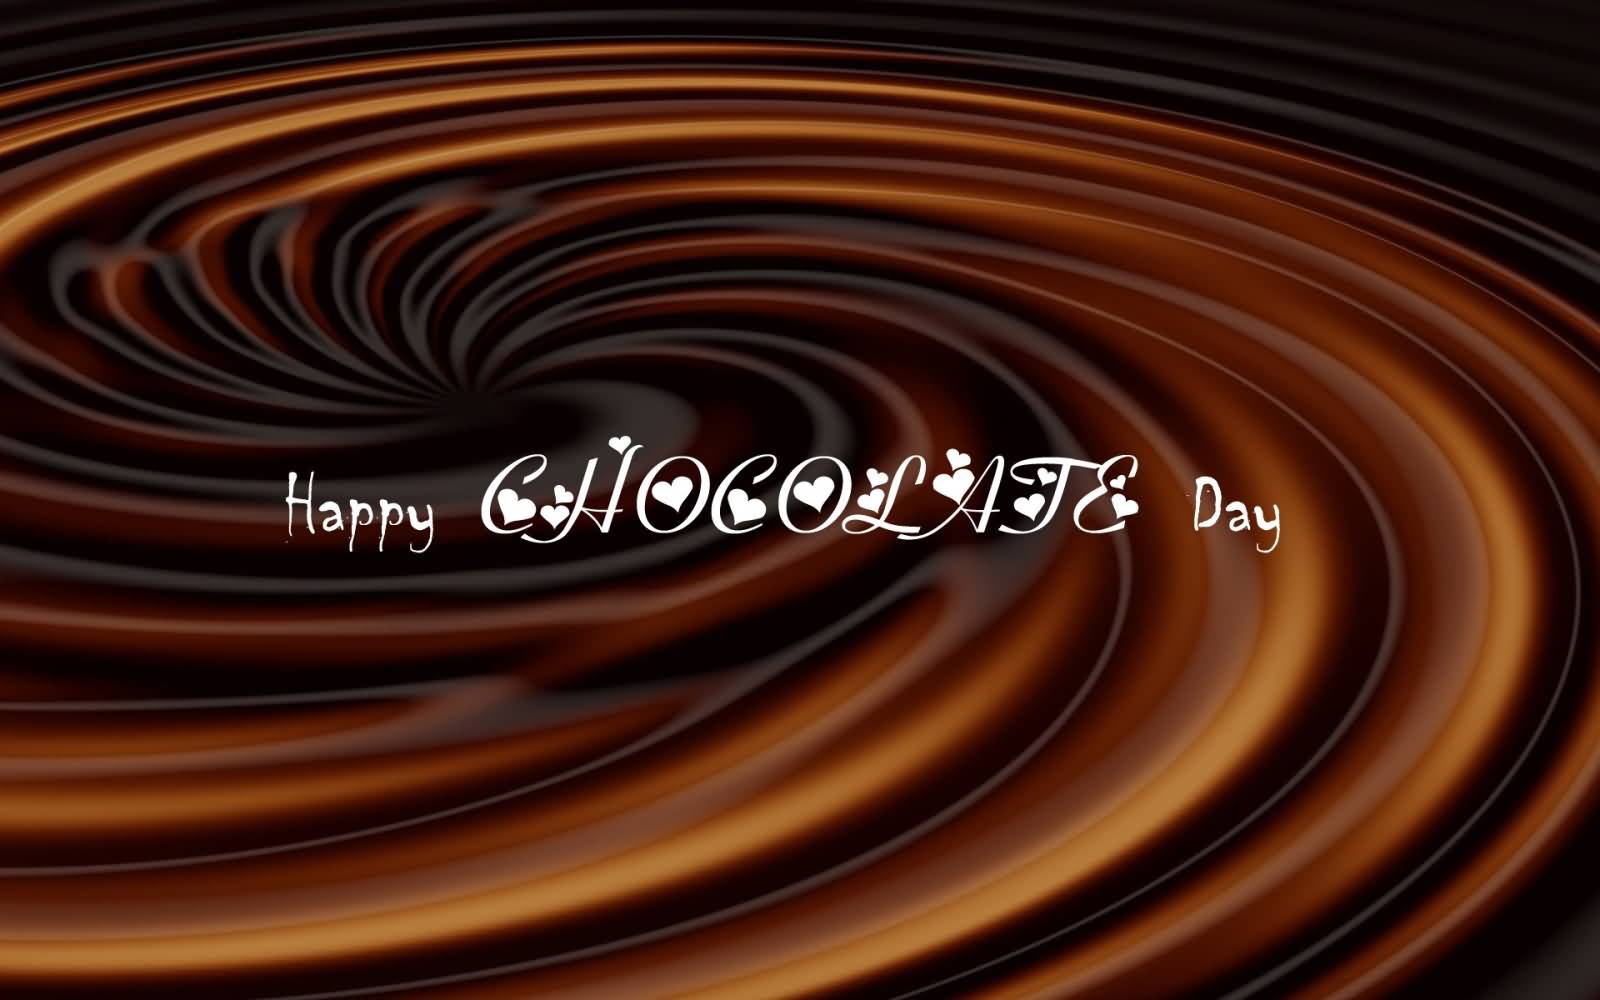 Happy Chocolate Day 2017 Wishes